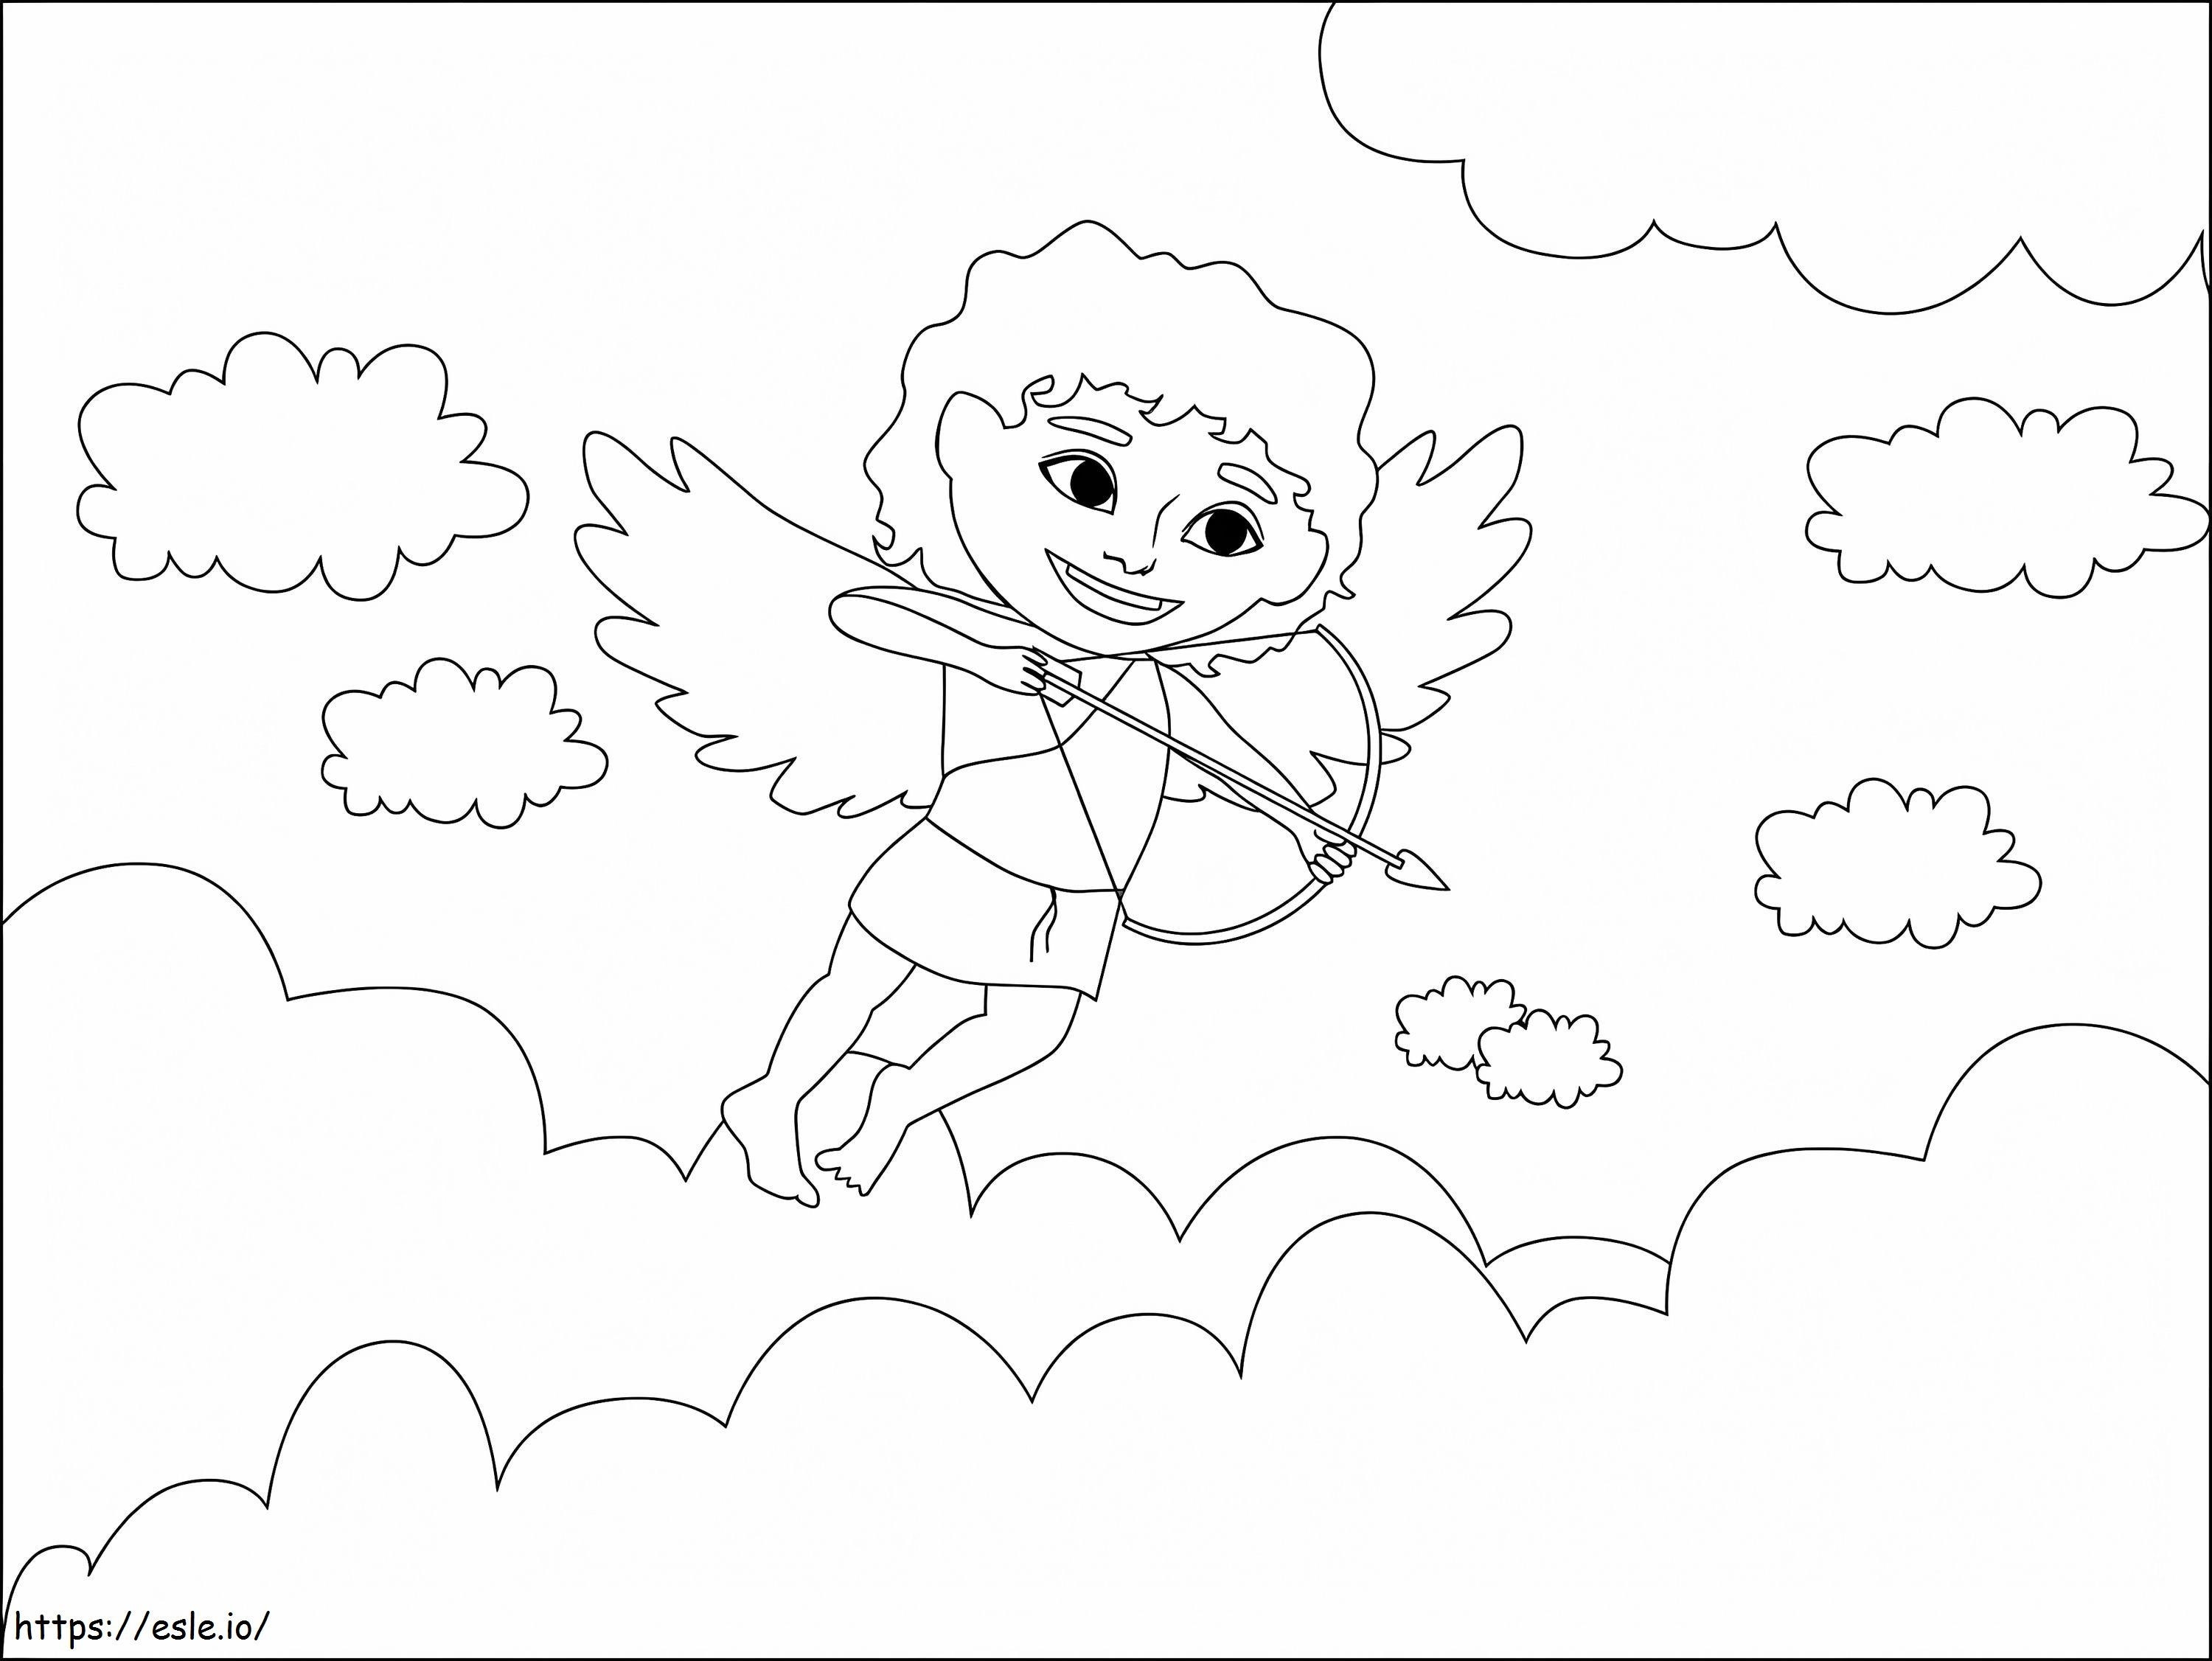 Adorable Cupid coloring page